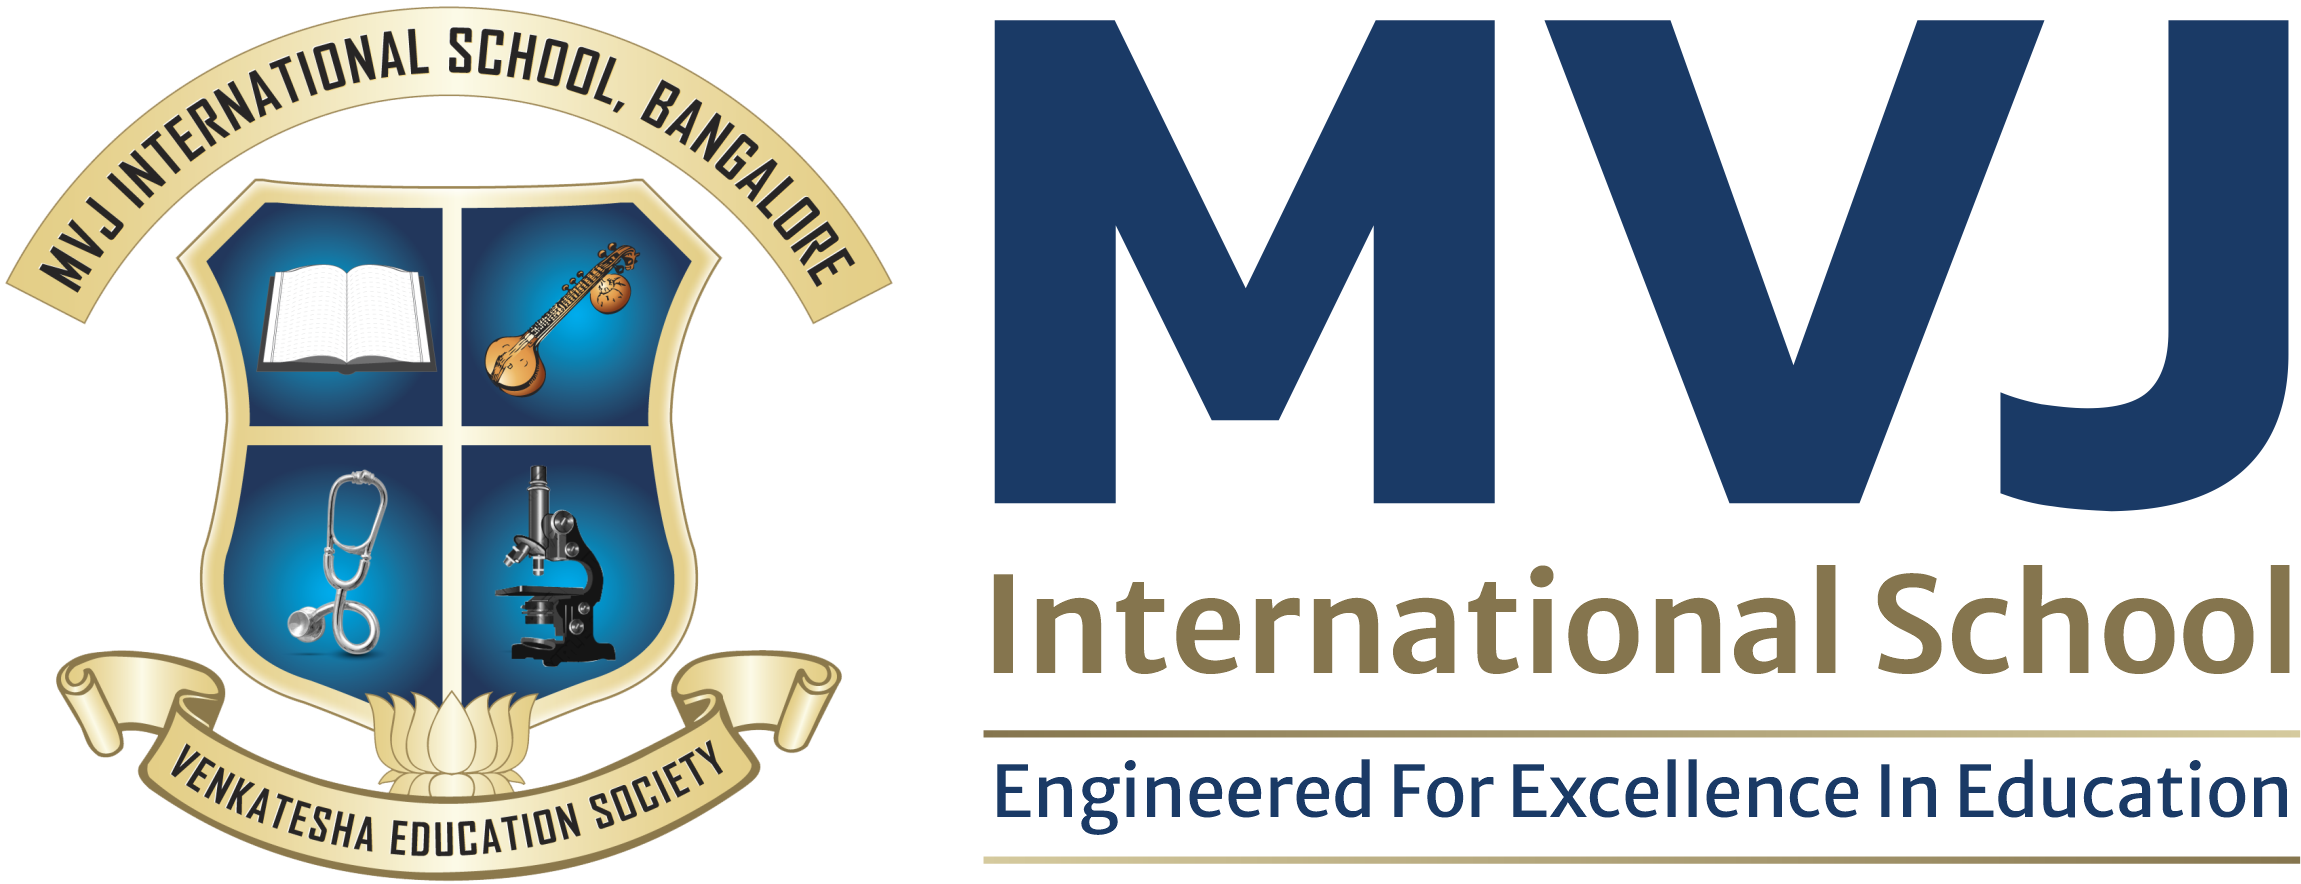 MVJ International School